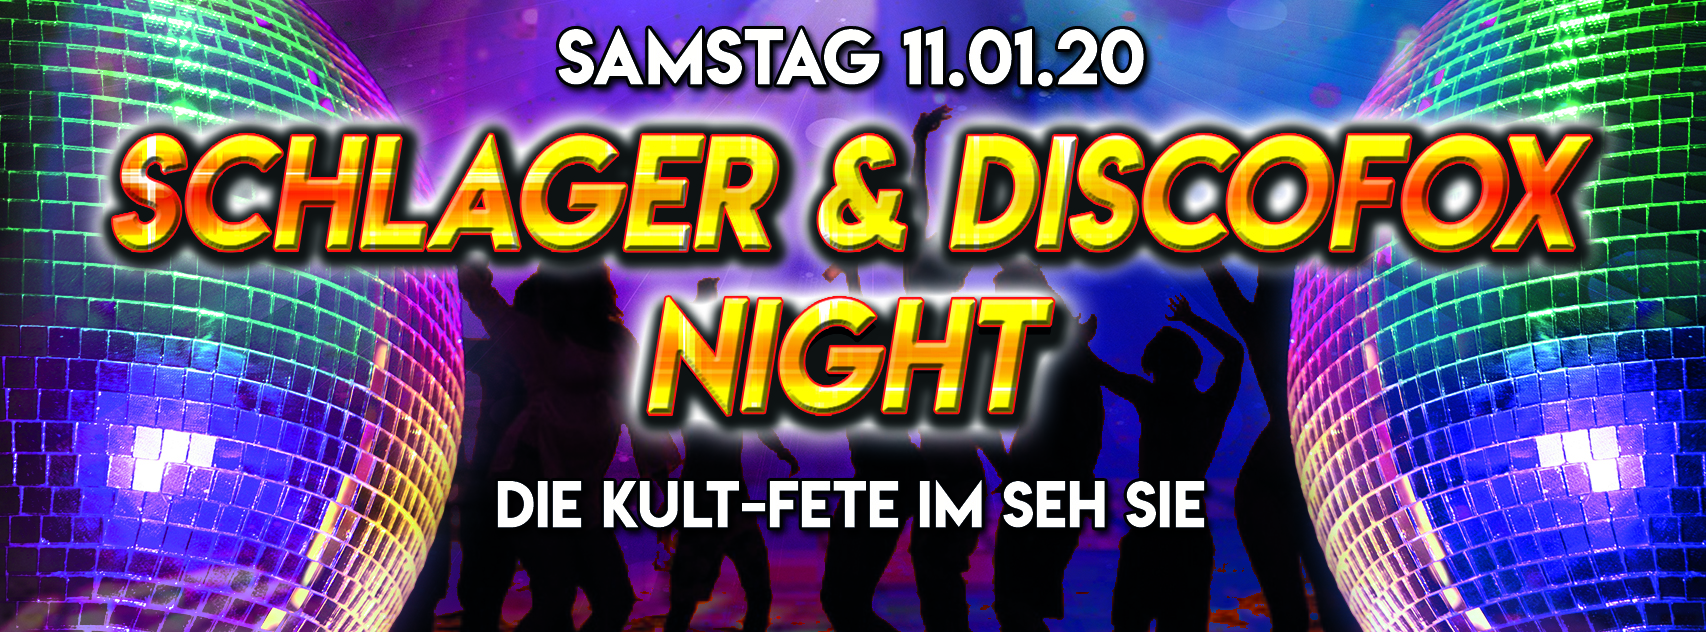 11.01.2020 Schlager & Discofox Night